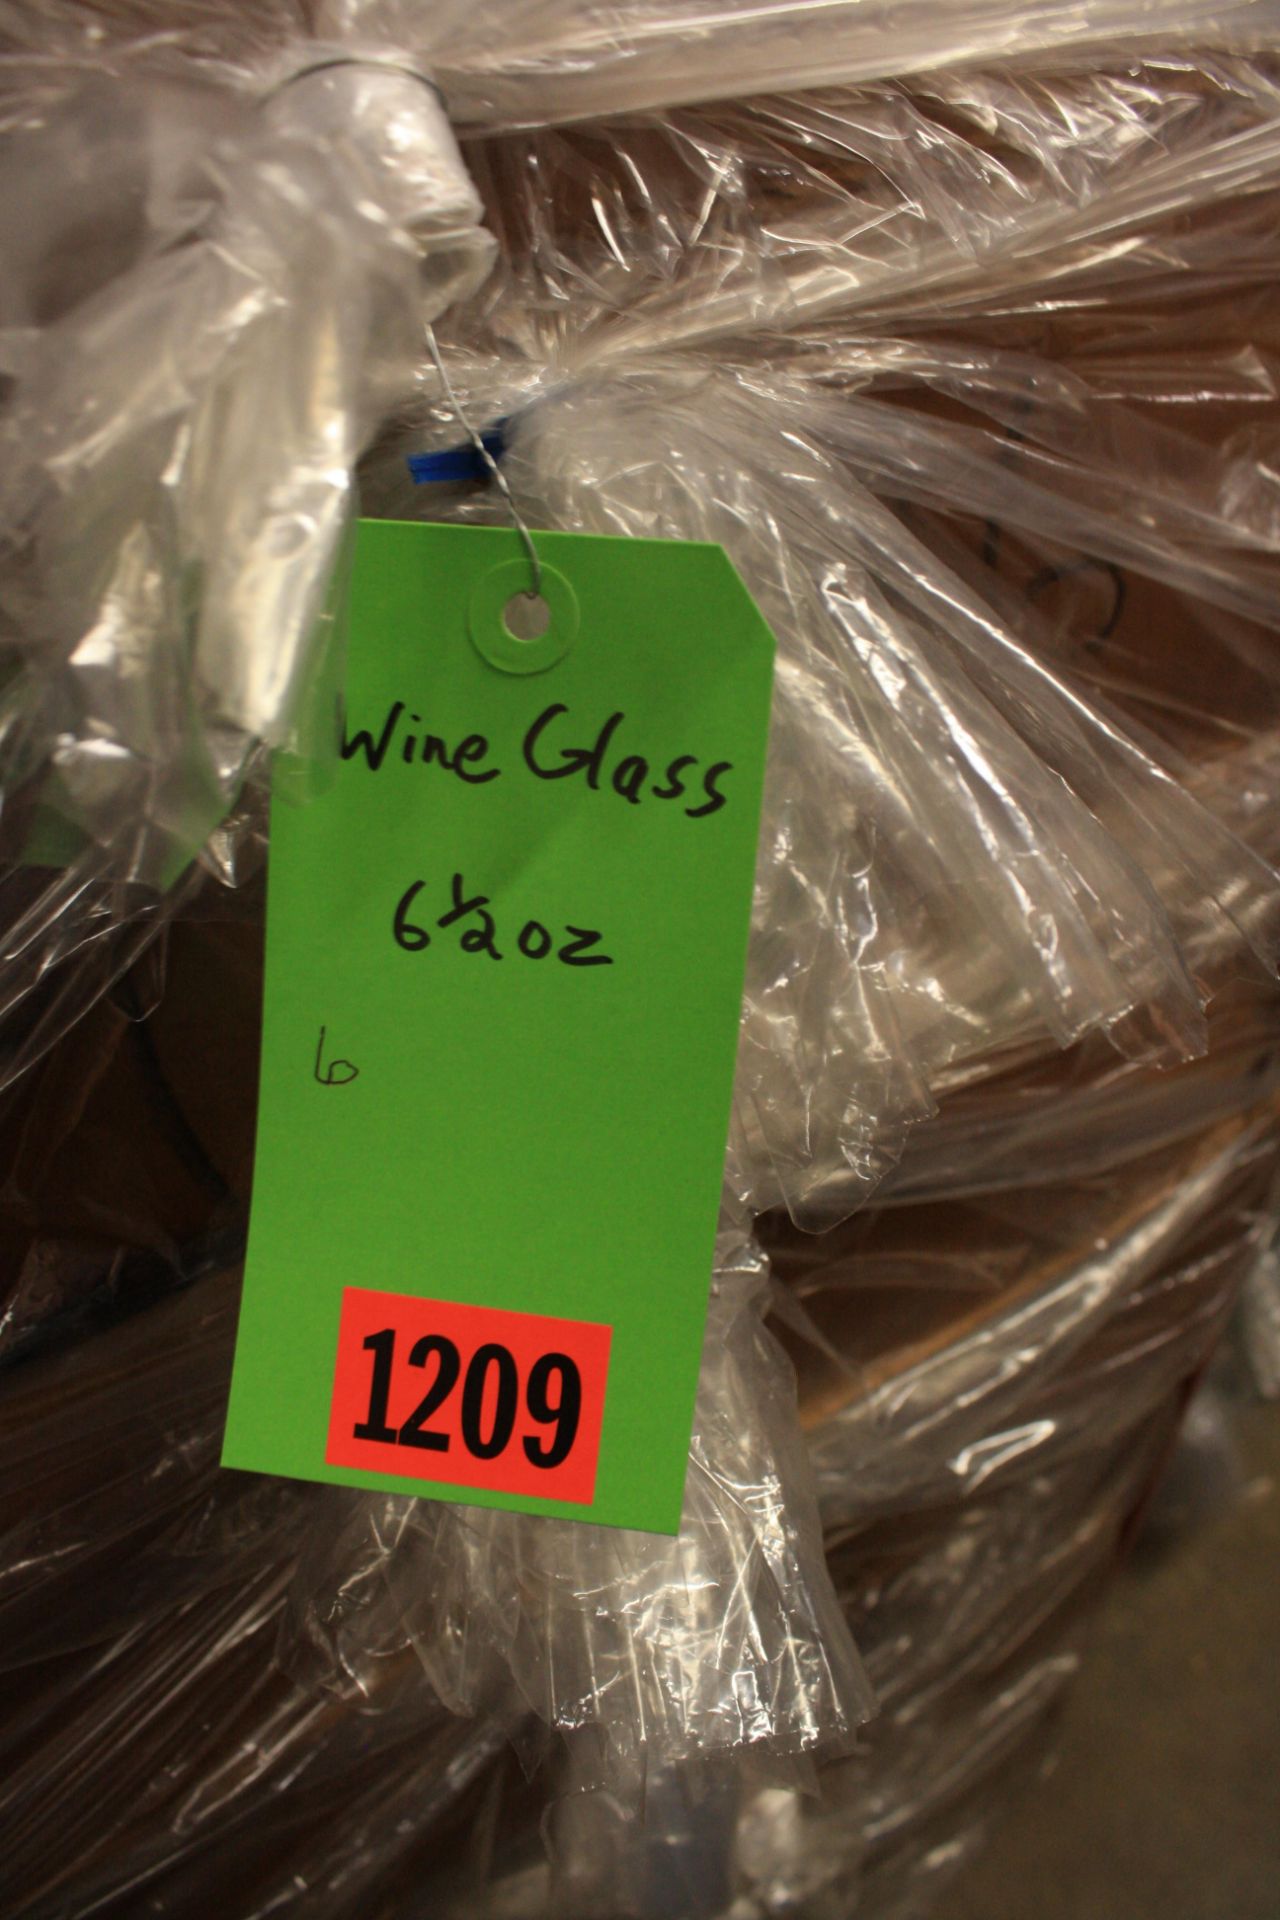 Lot of 326 Wine Glasses, 6.5 oz. - Image 2 of 3